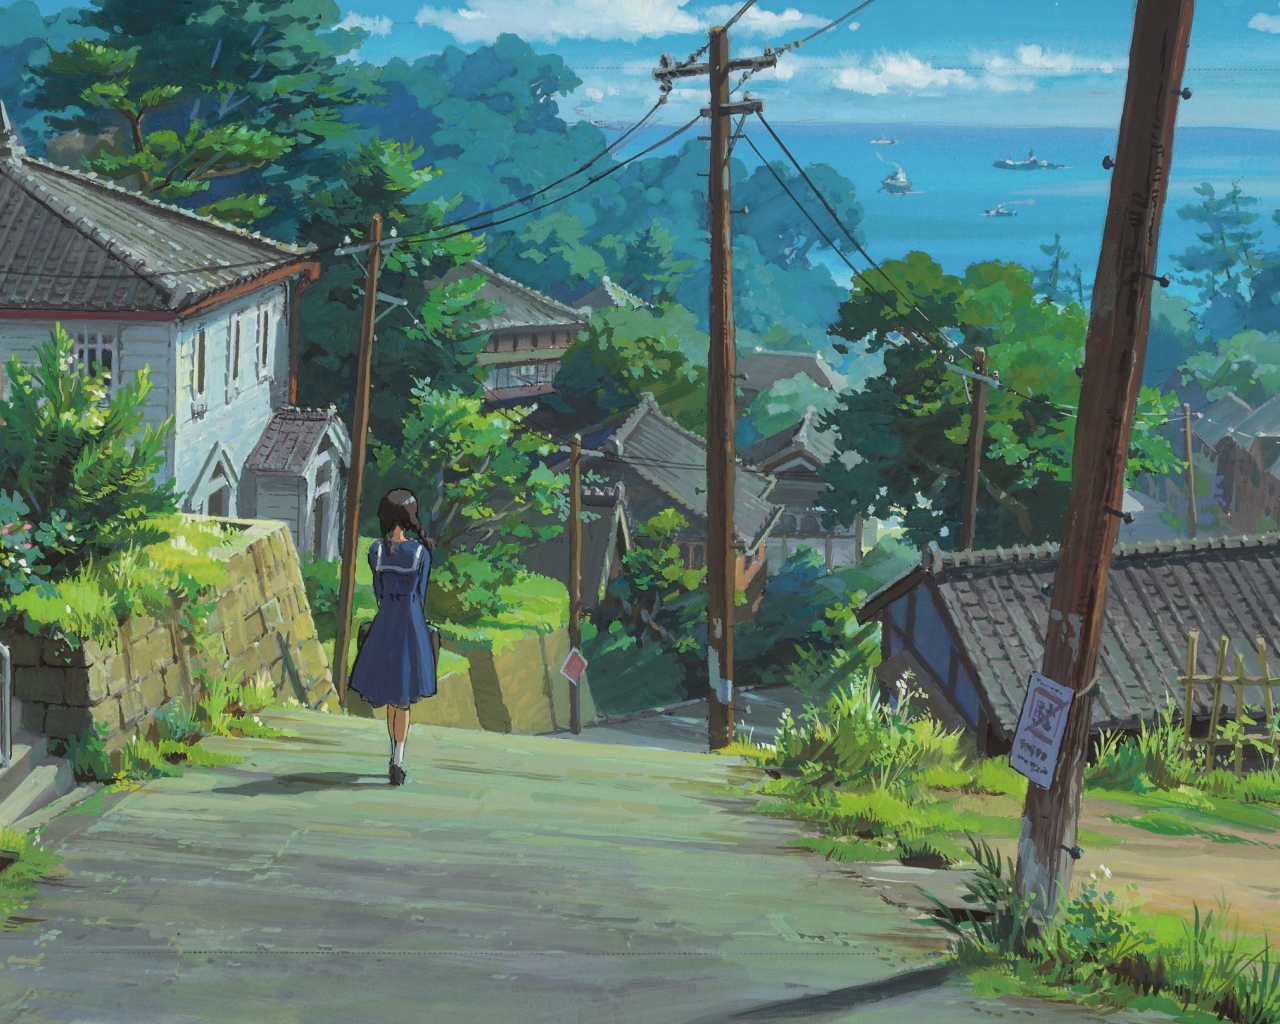 Miyazaki's anime cartoon, girl walking along the road